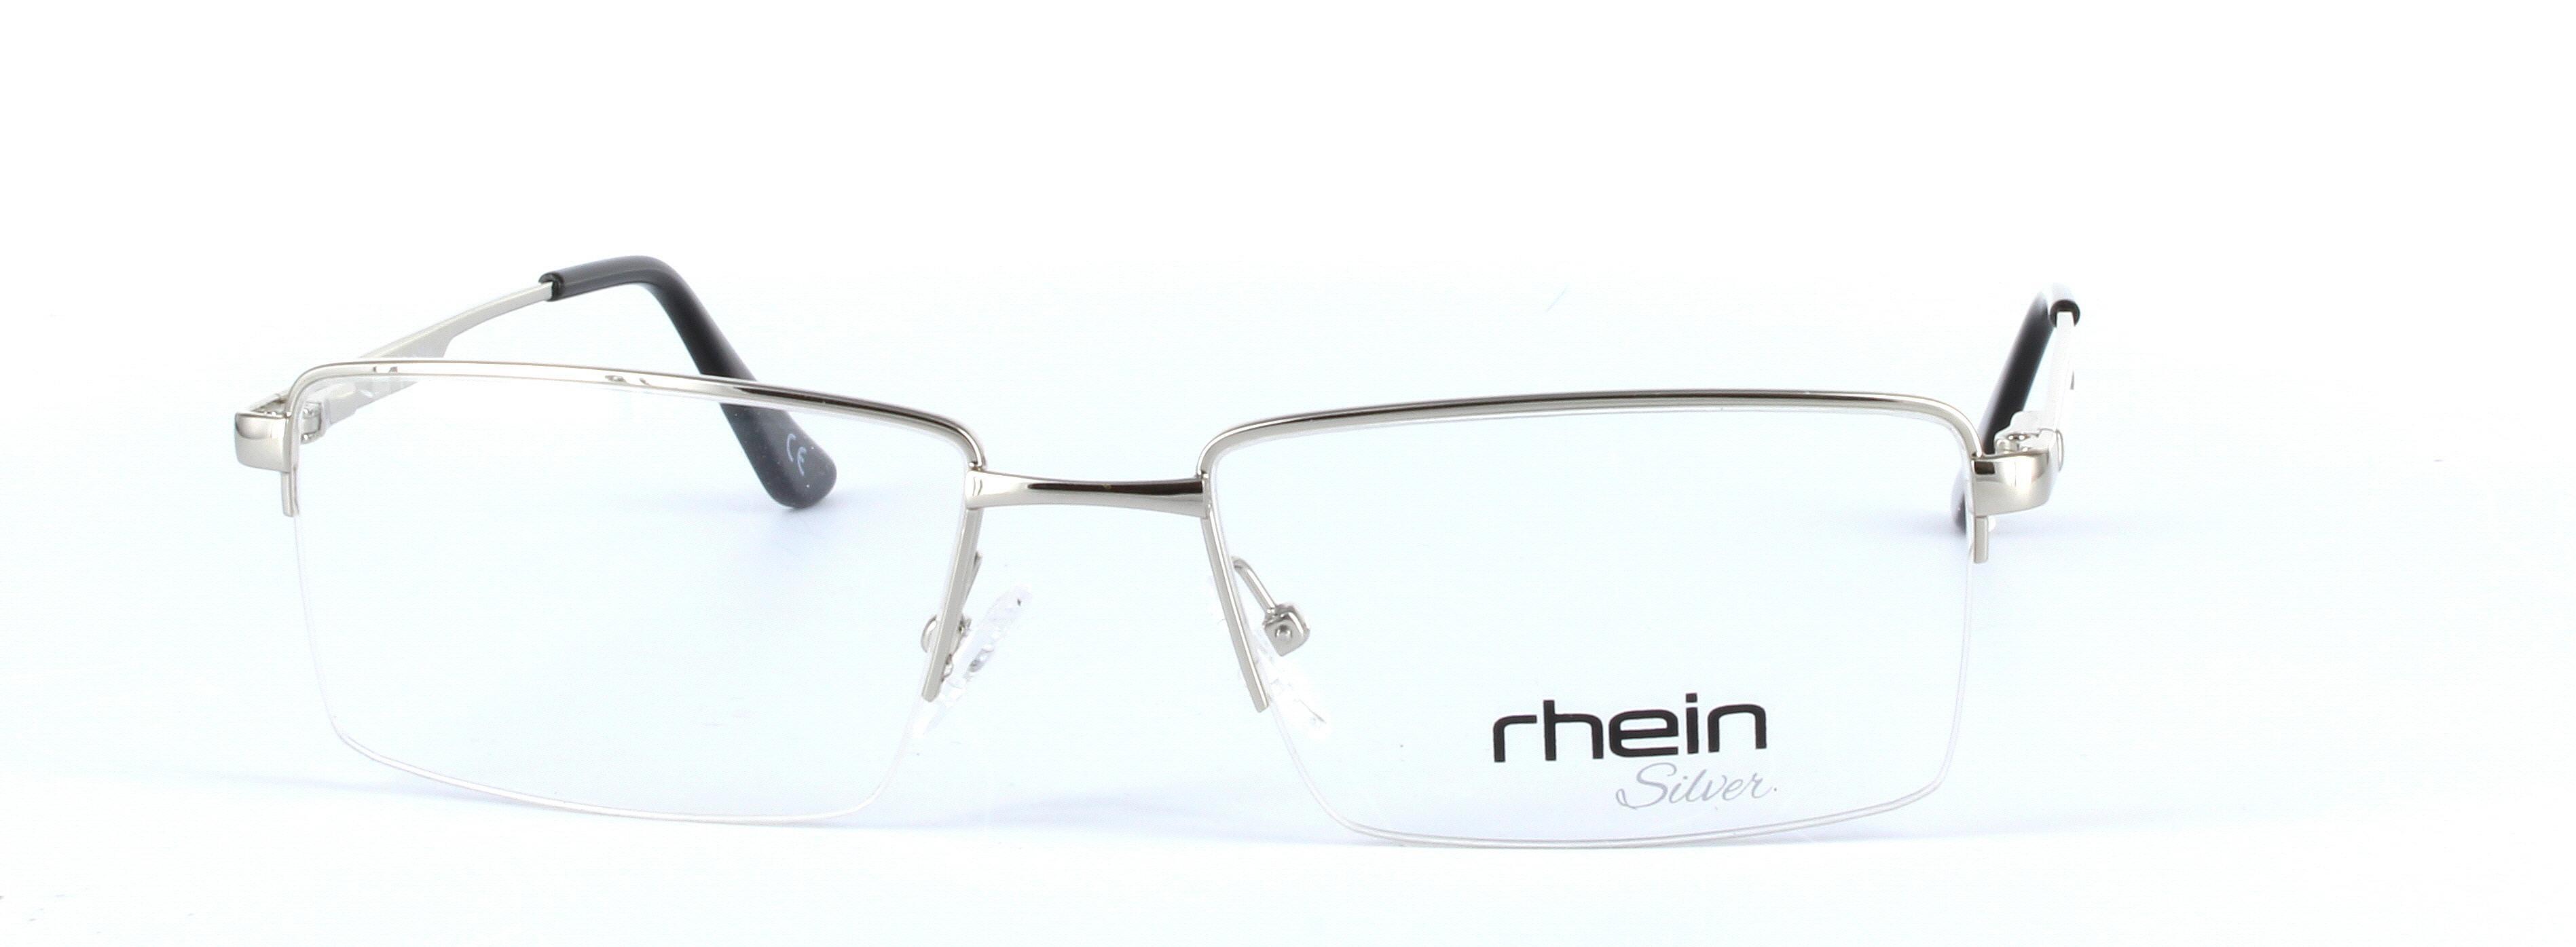 Highfield Silver Semi Rimless Rectangular Metal Glasses - Image View 5